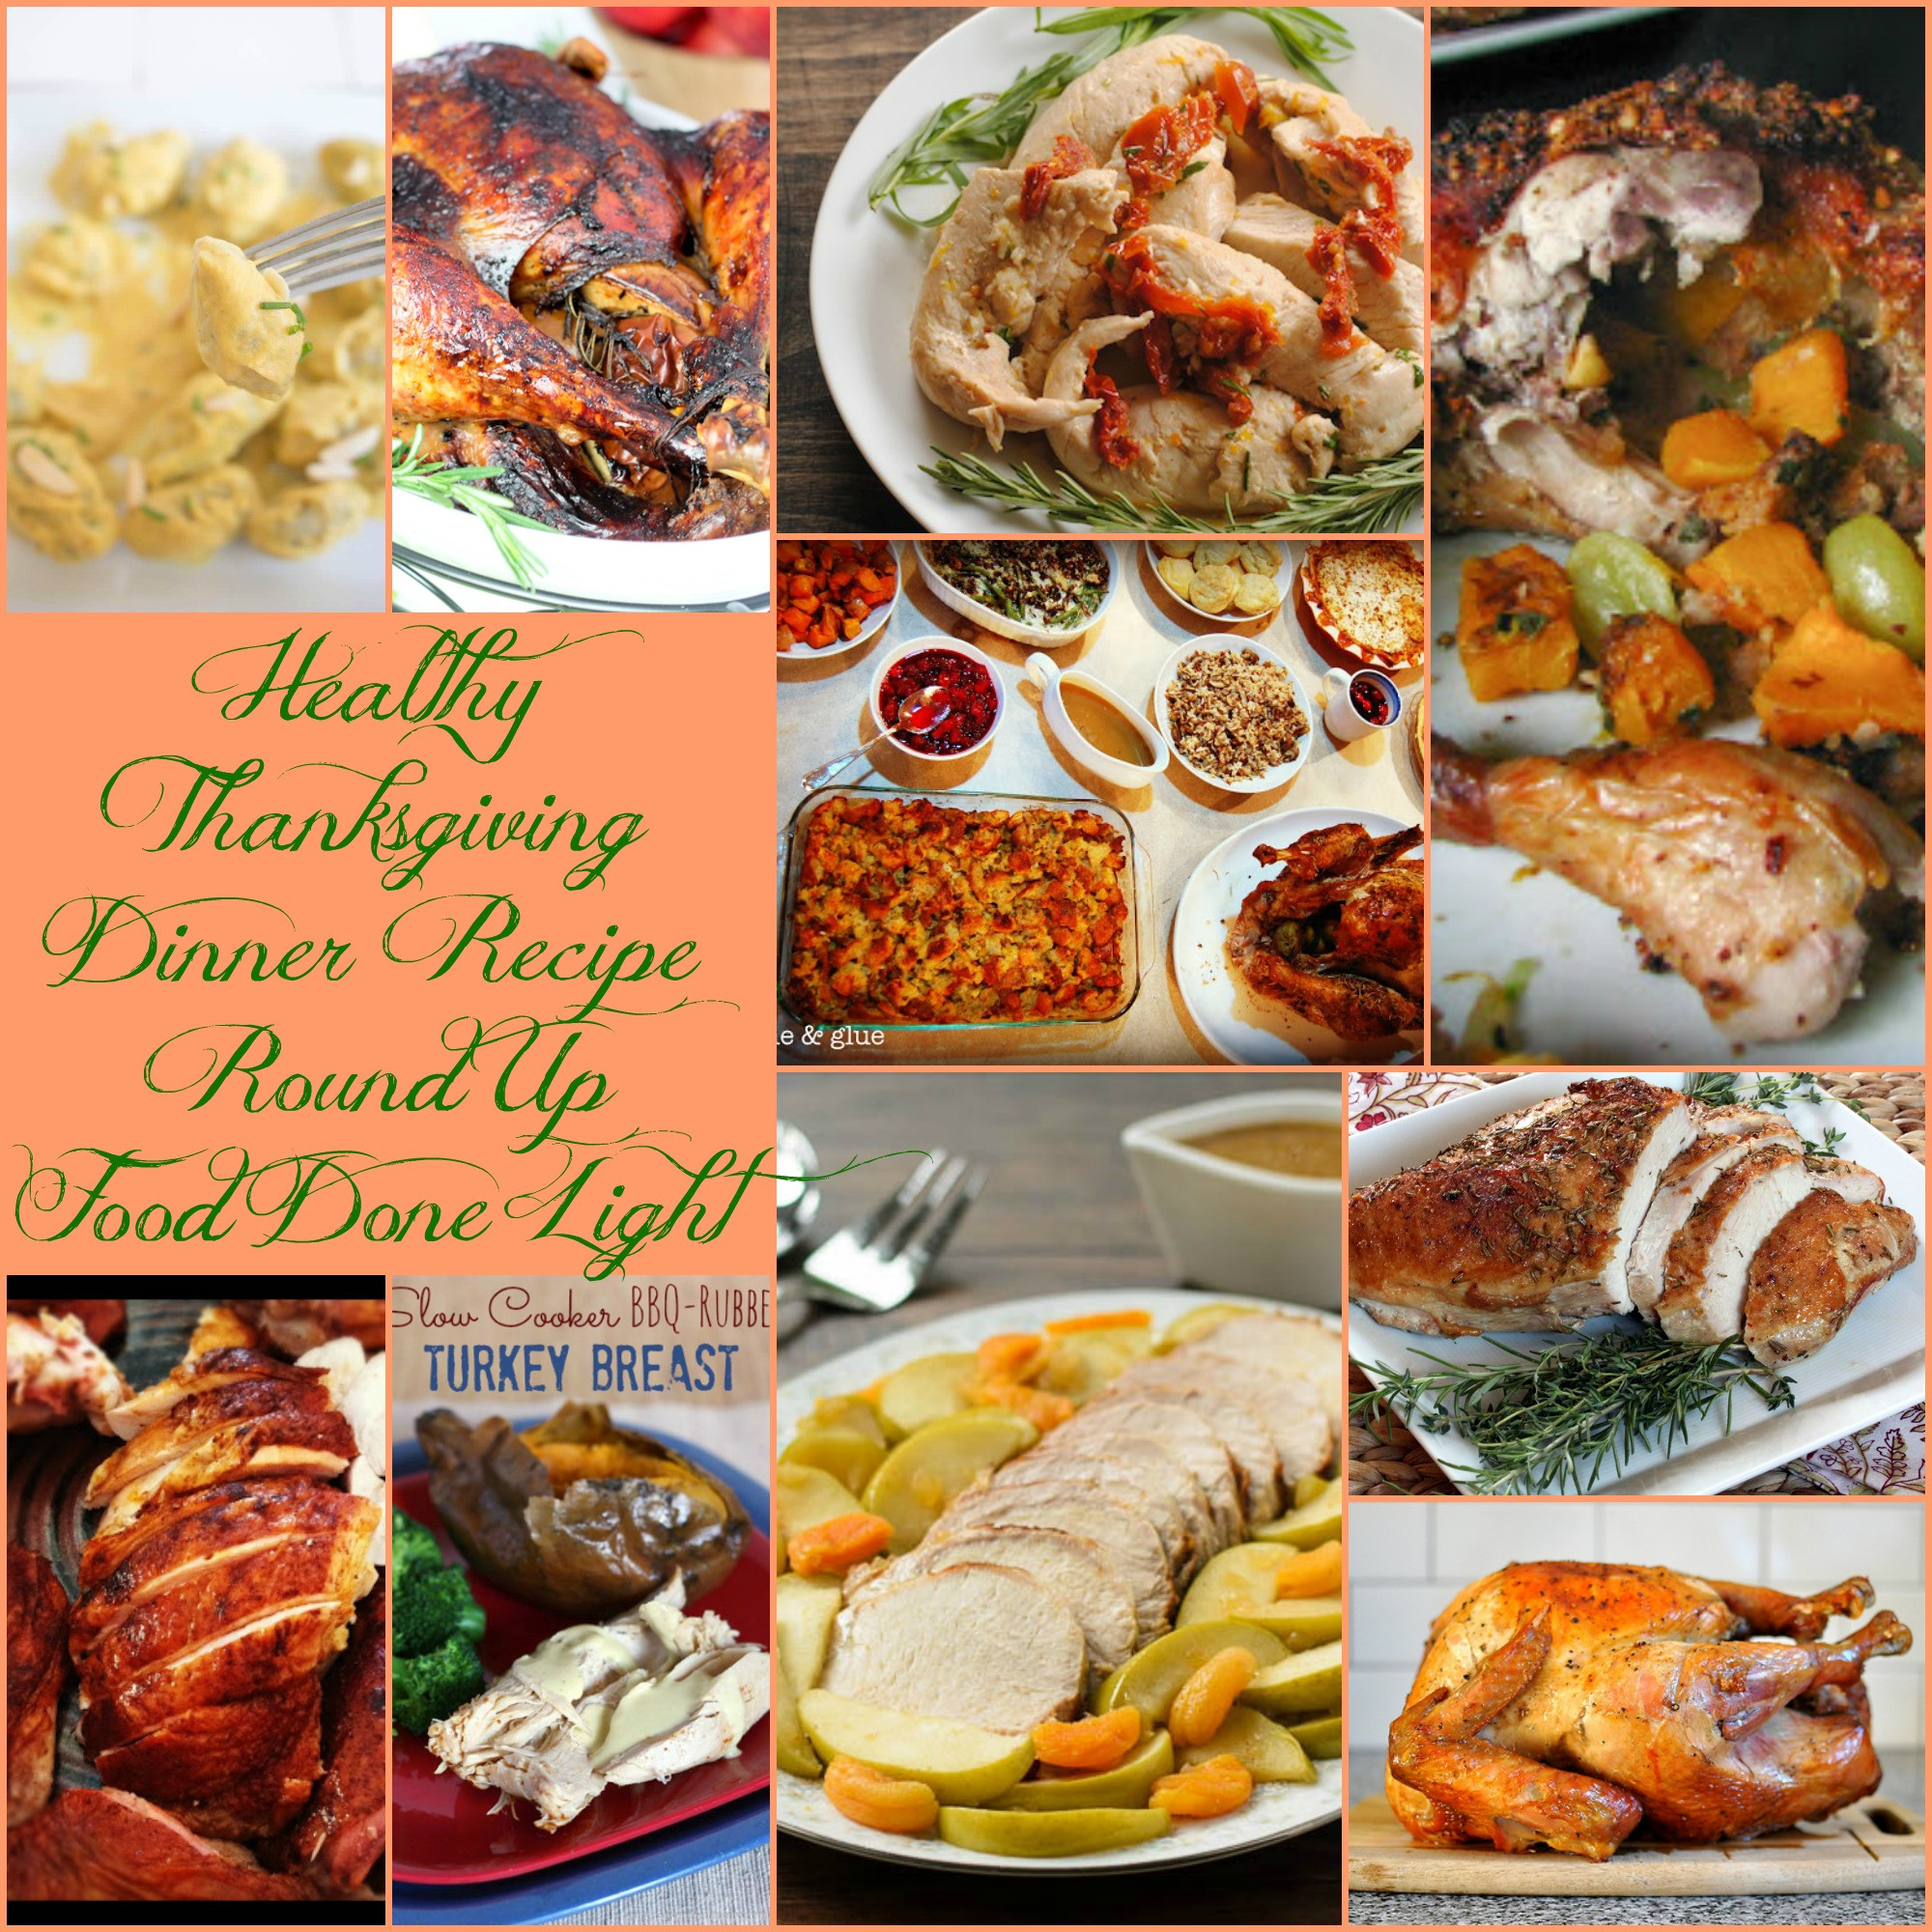 Turkey Recipes For Thanksgiving Dinner
 Healthy Thanksgiving Turkey Recipe Round Up Food Done Light